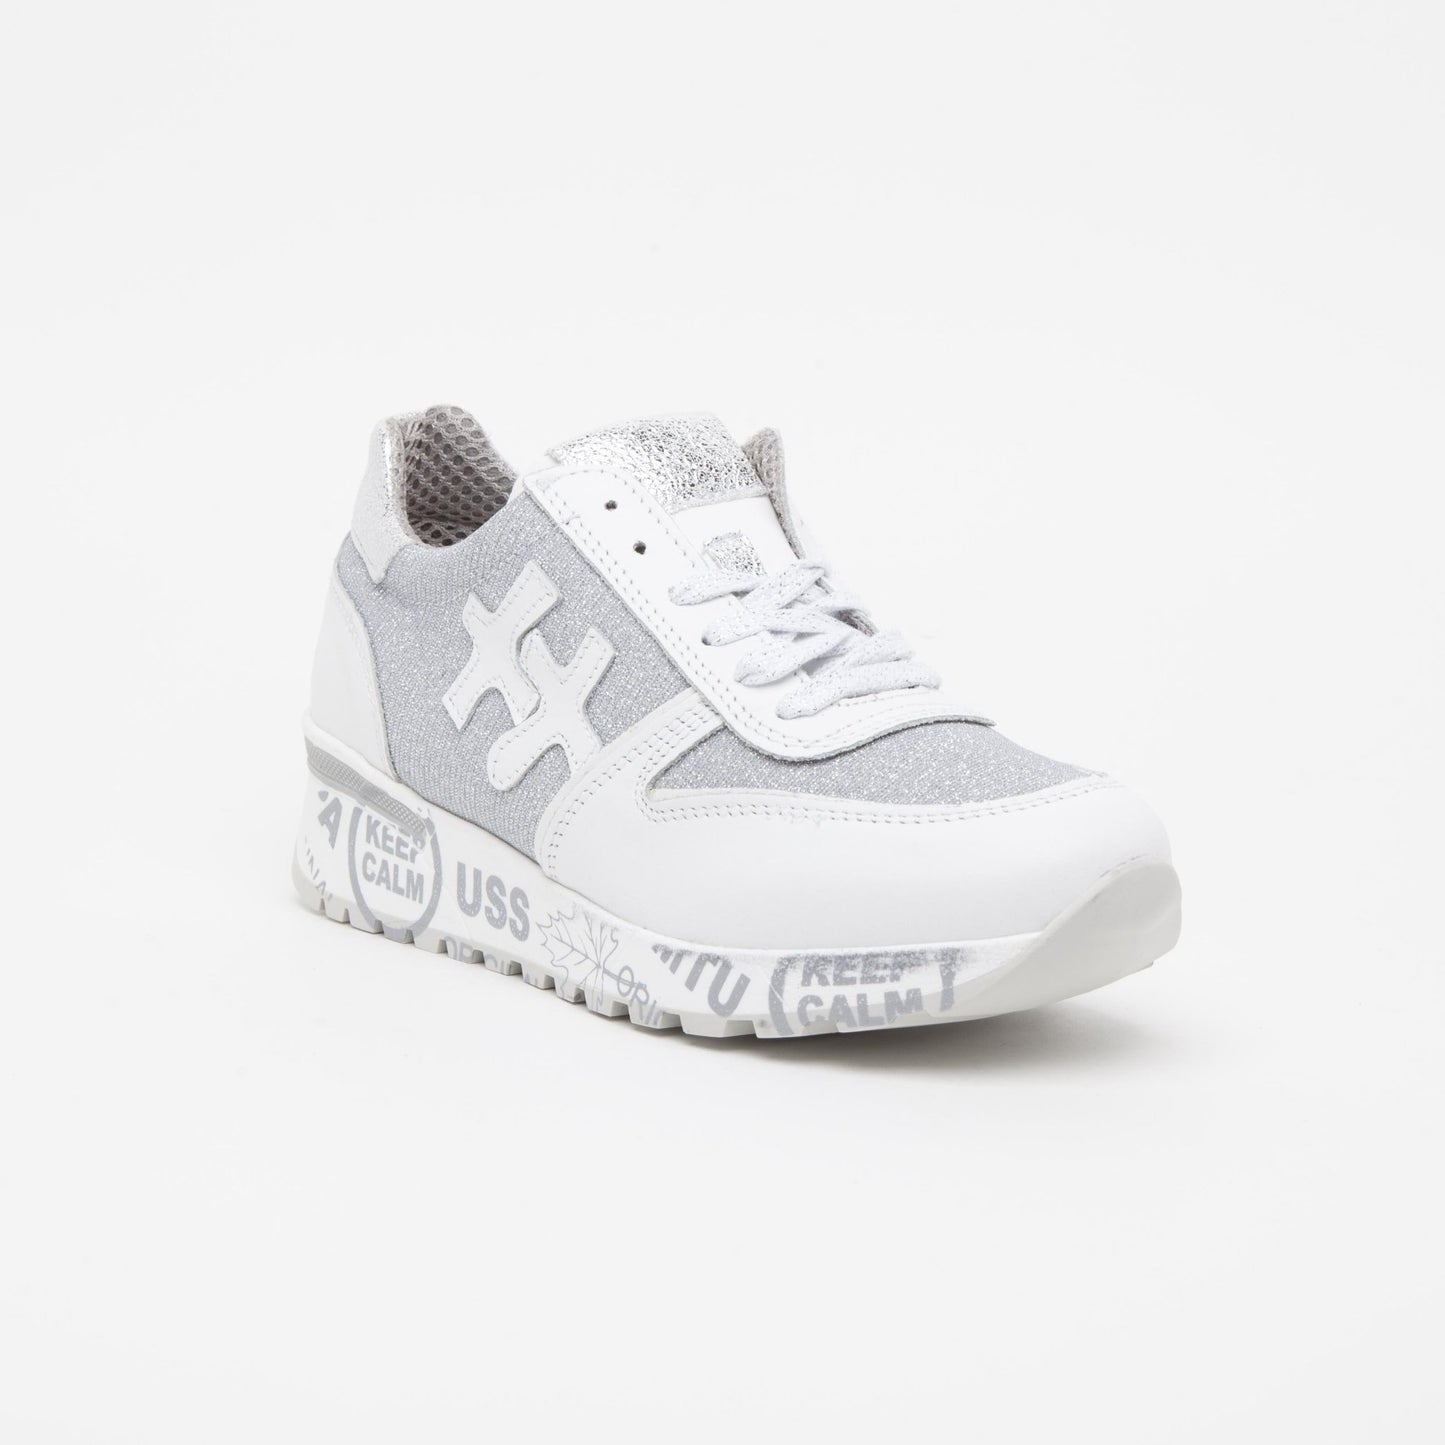 Sneakers in nappa bianco-argento. - TreemmeCreazioni